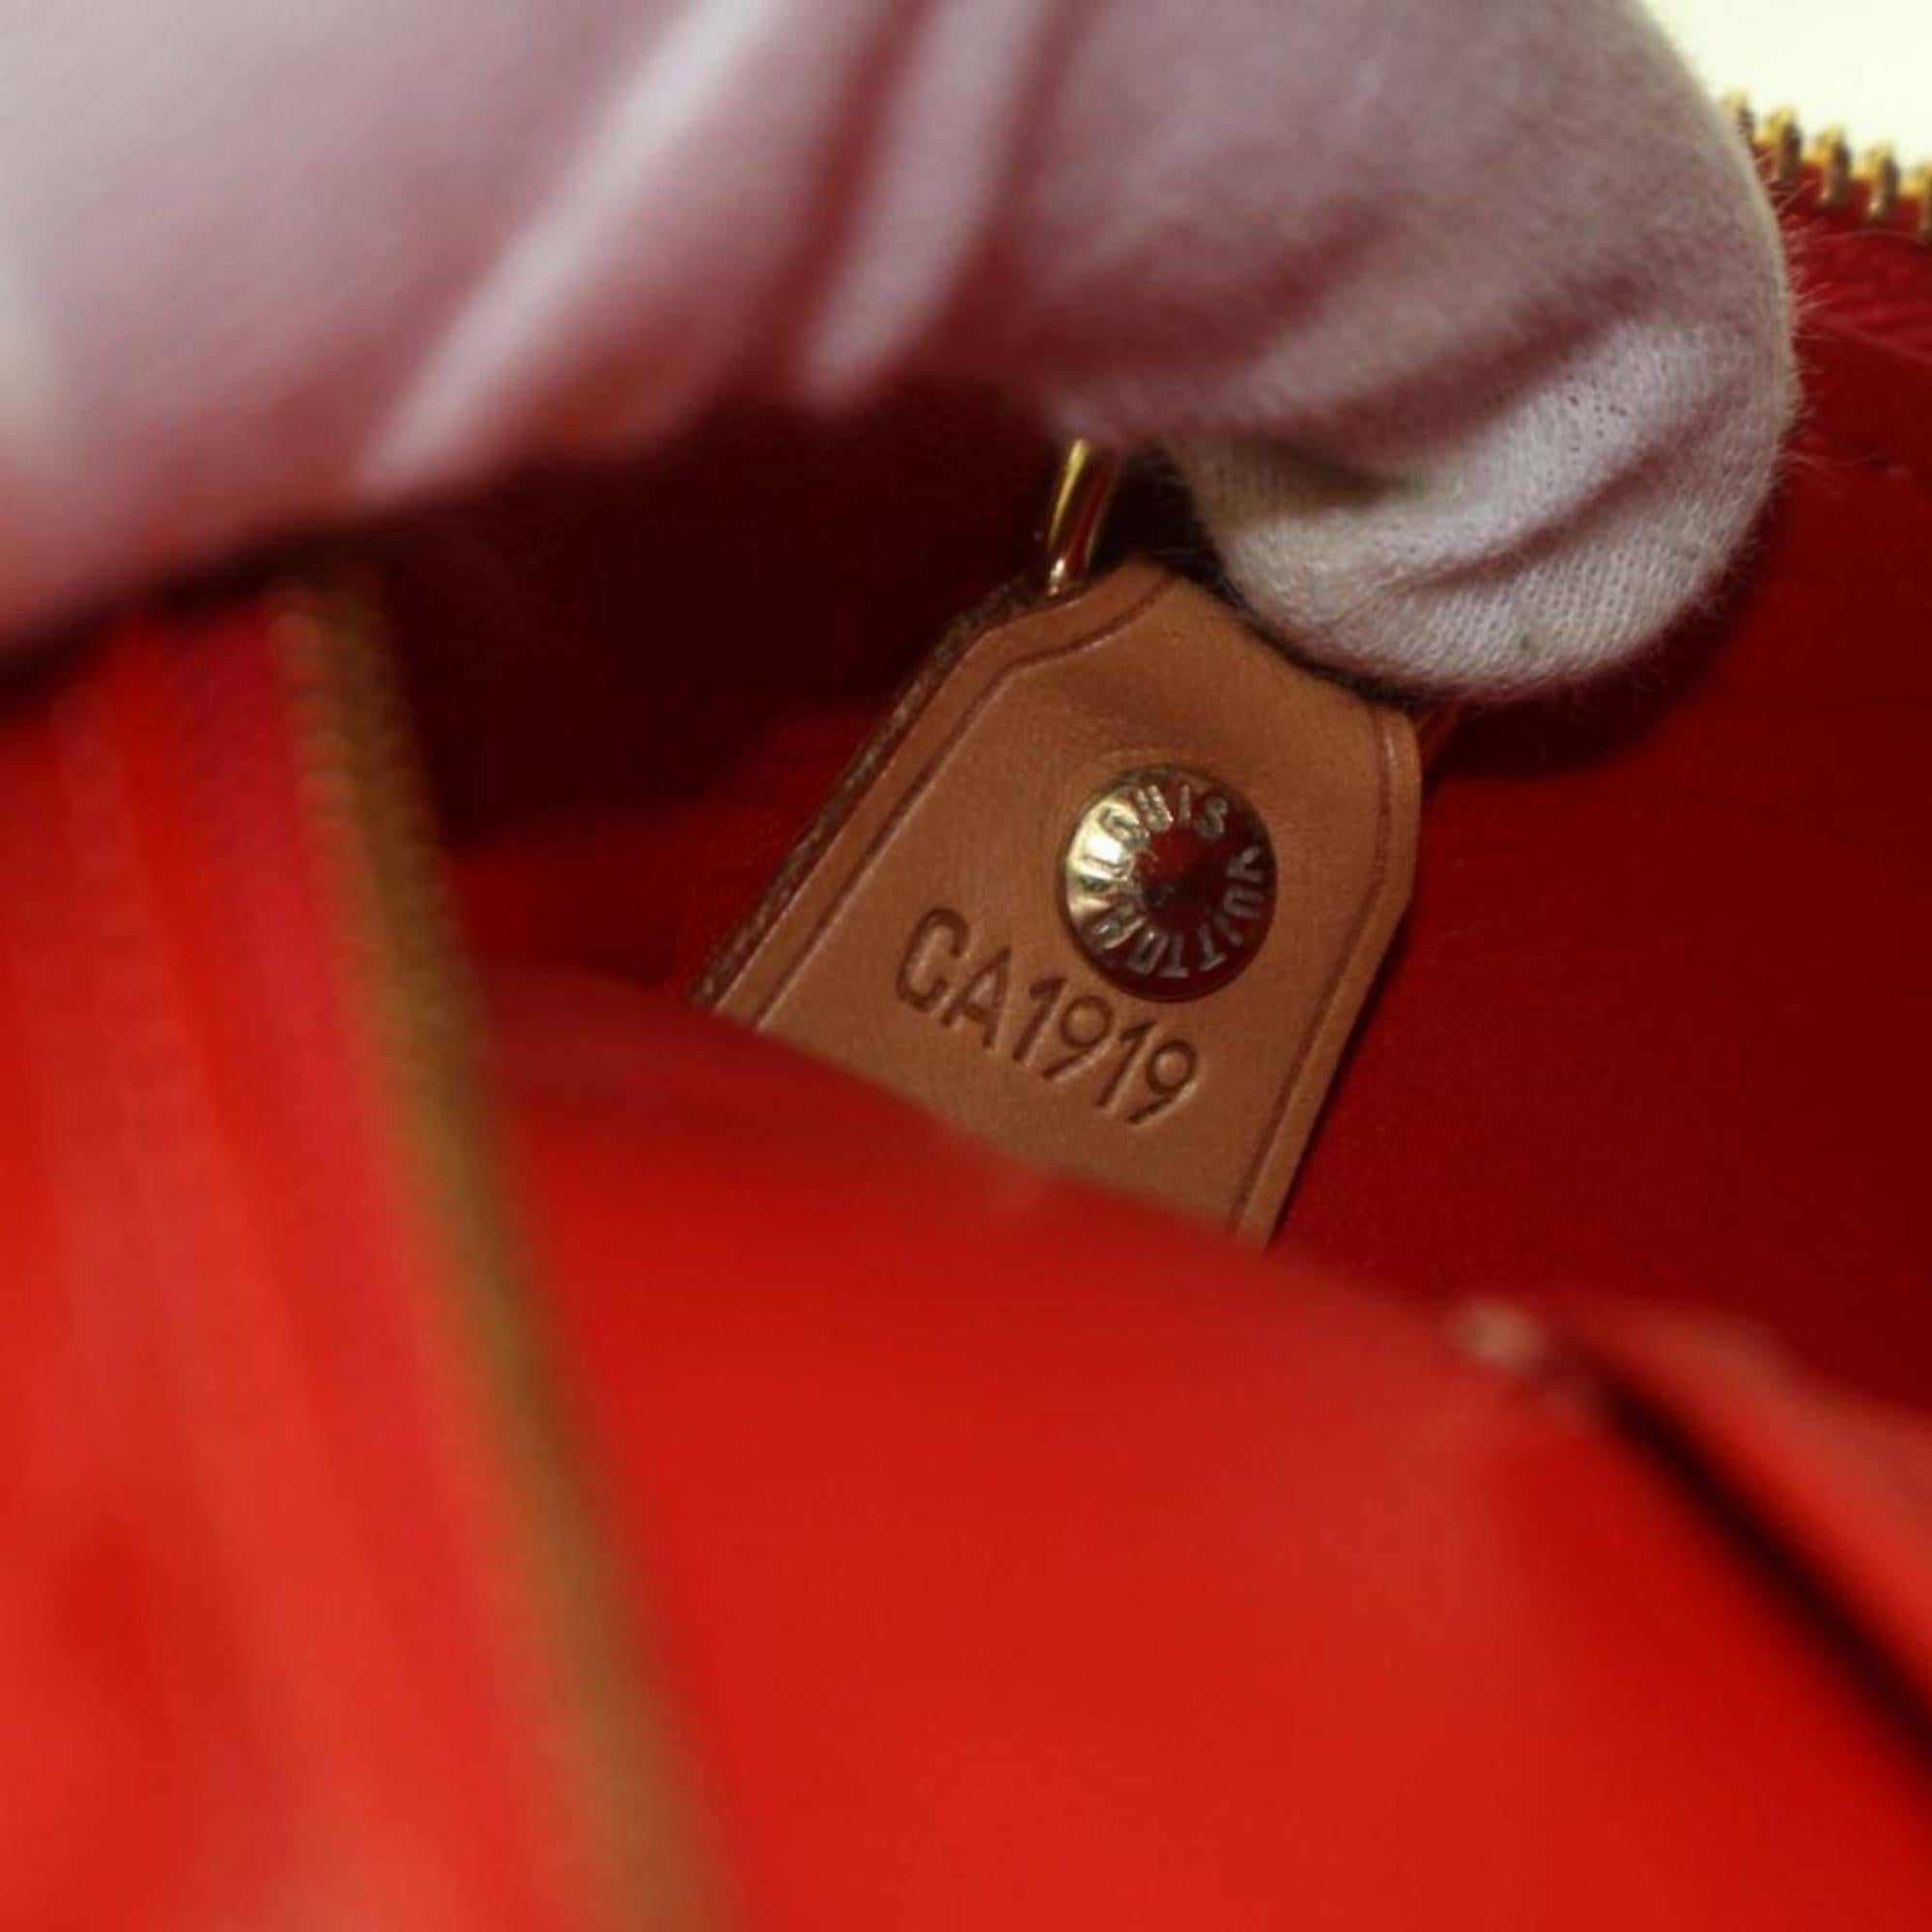 louis vuitton handbag red patent leather